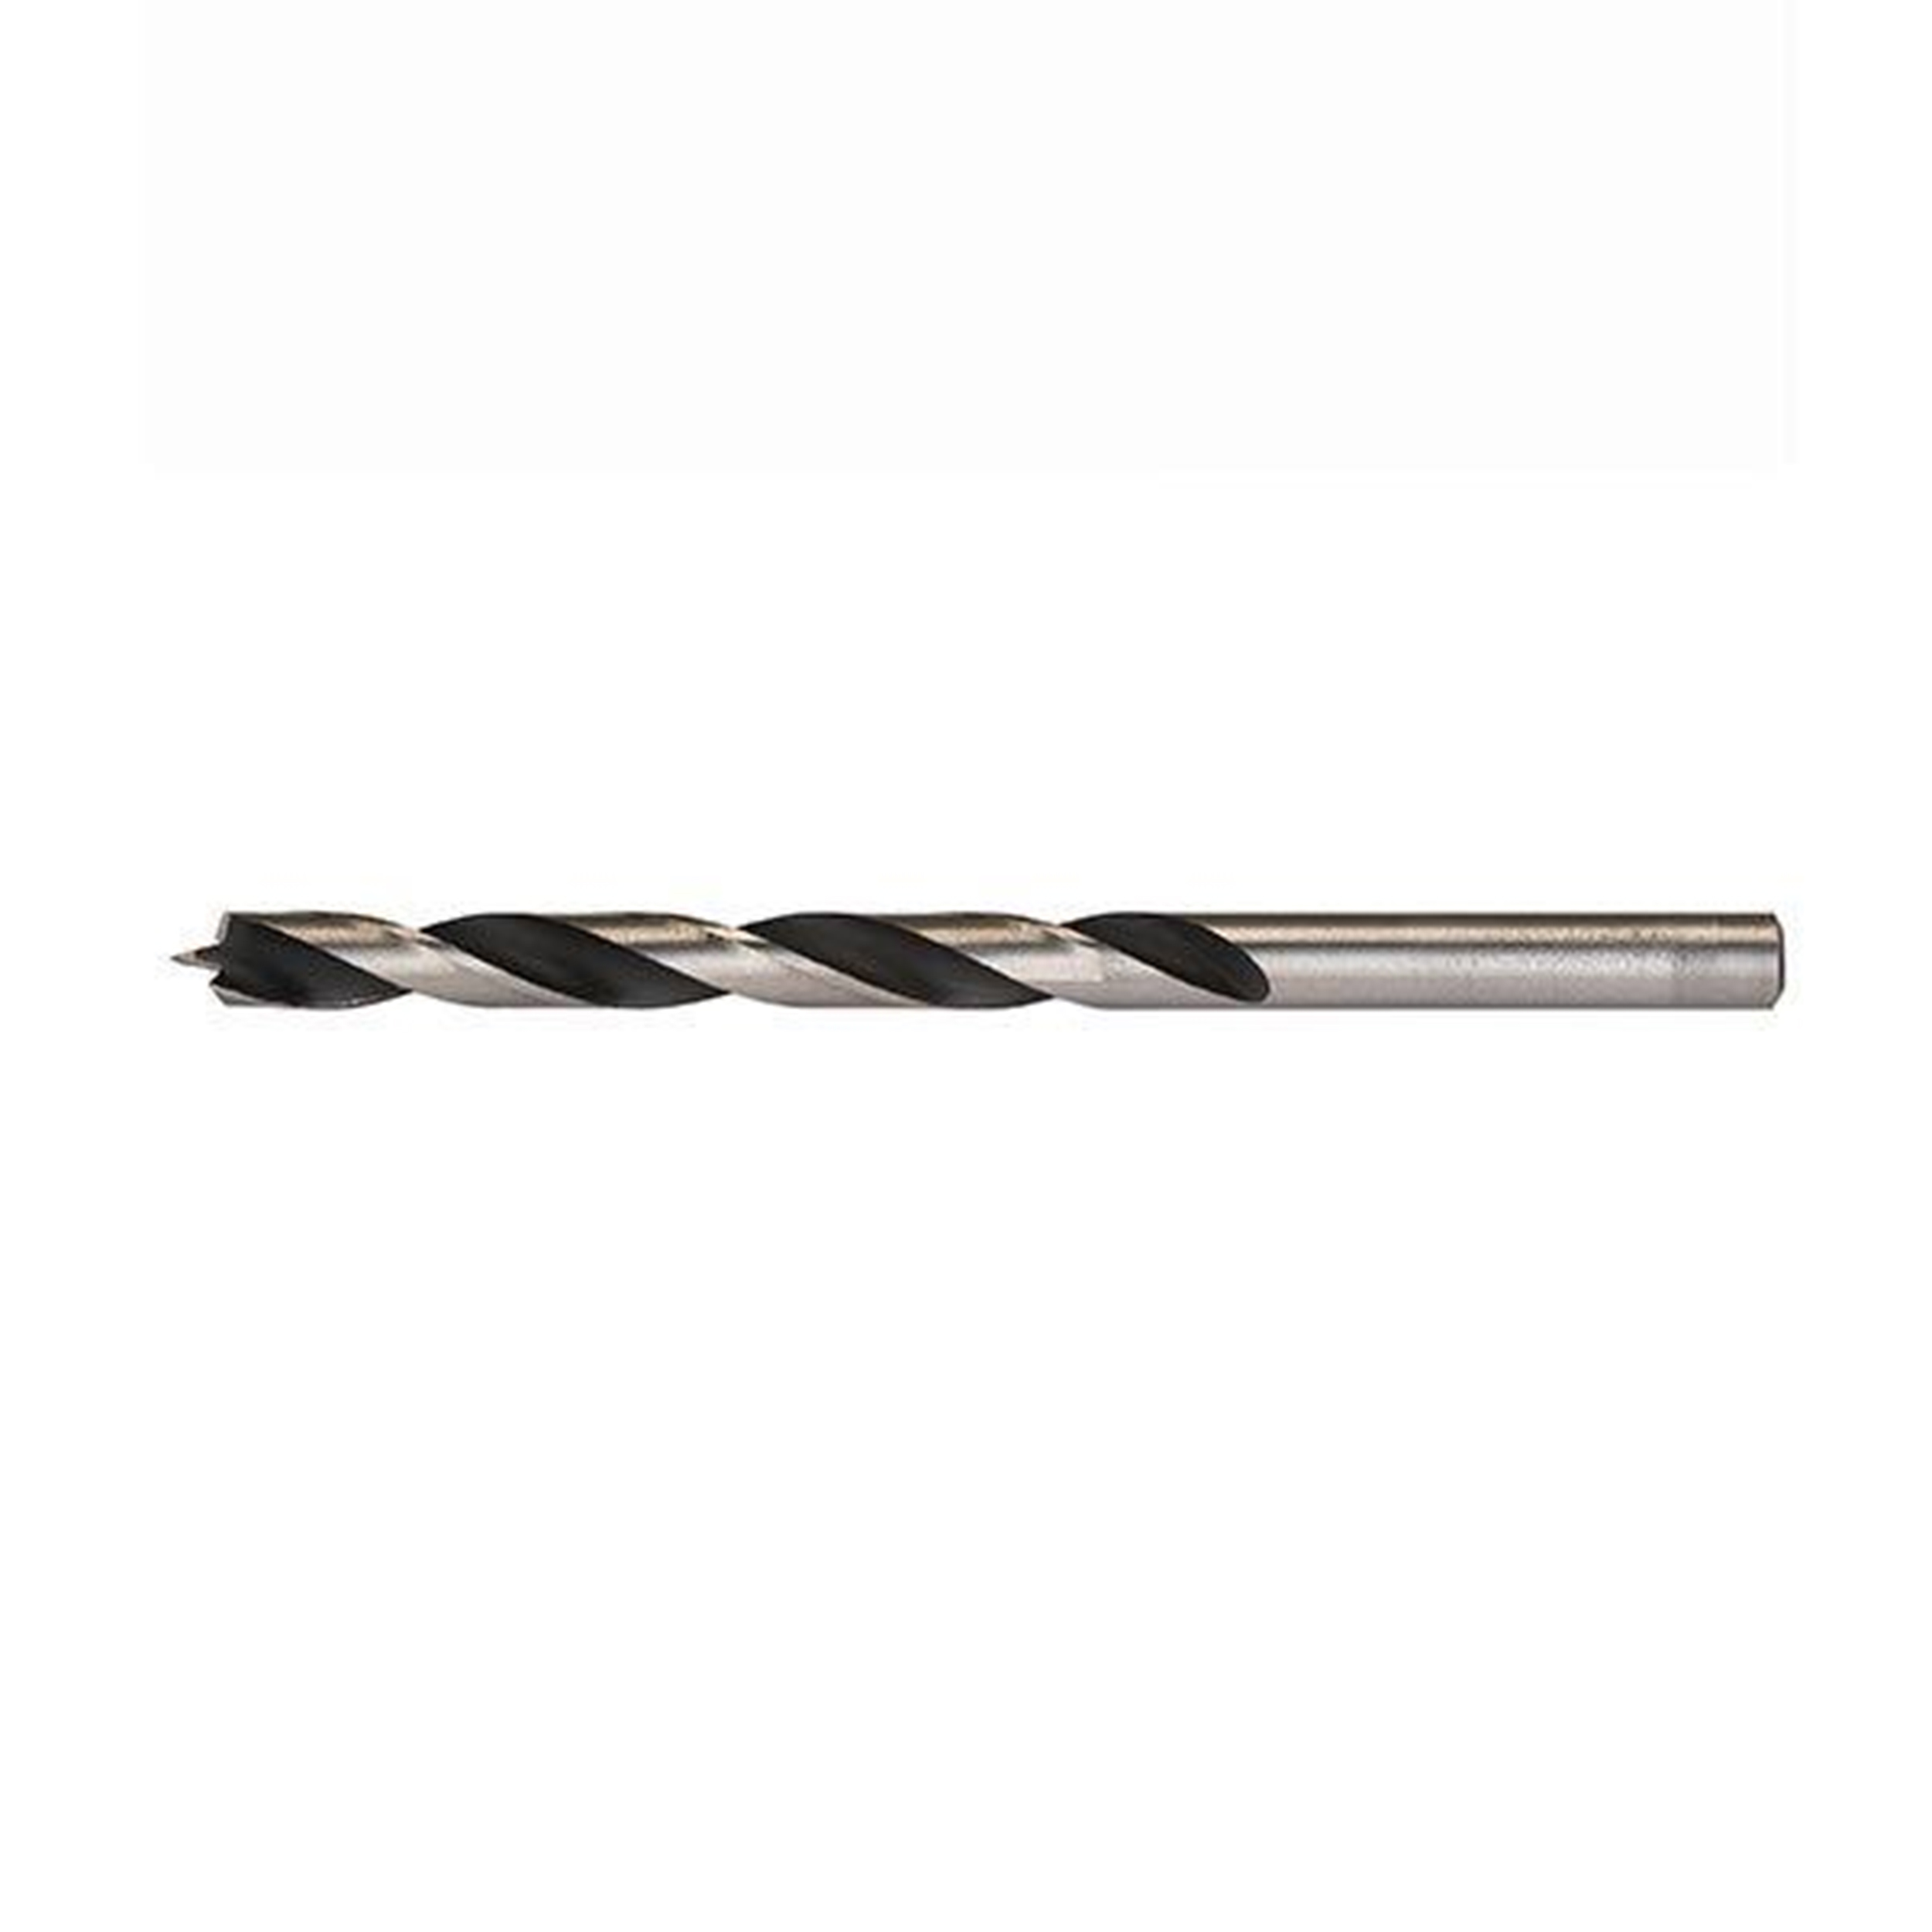 1/4-inch Chrome-vanadium Steel Brad Point Drill Bit